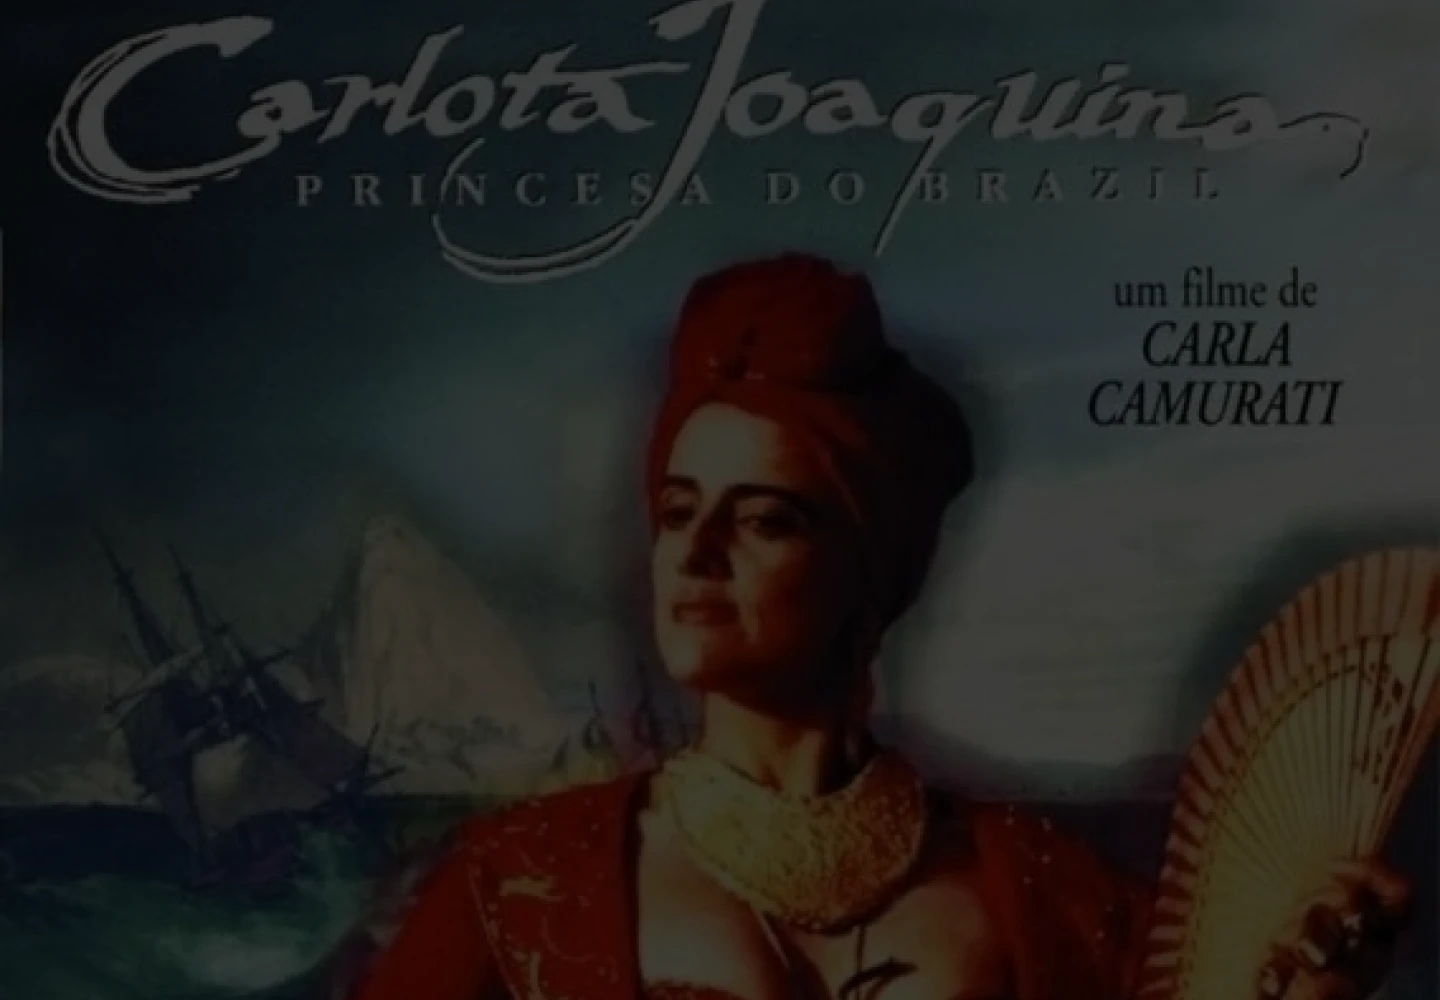 Poster of the movie “Carlota Joaquina, Princess of Brazil”.